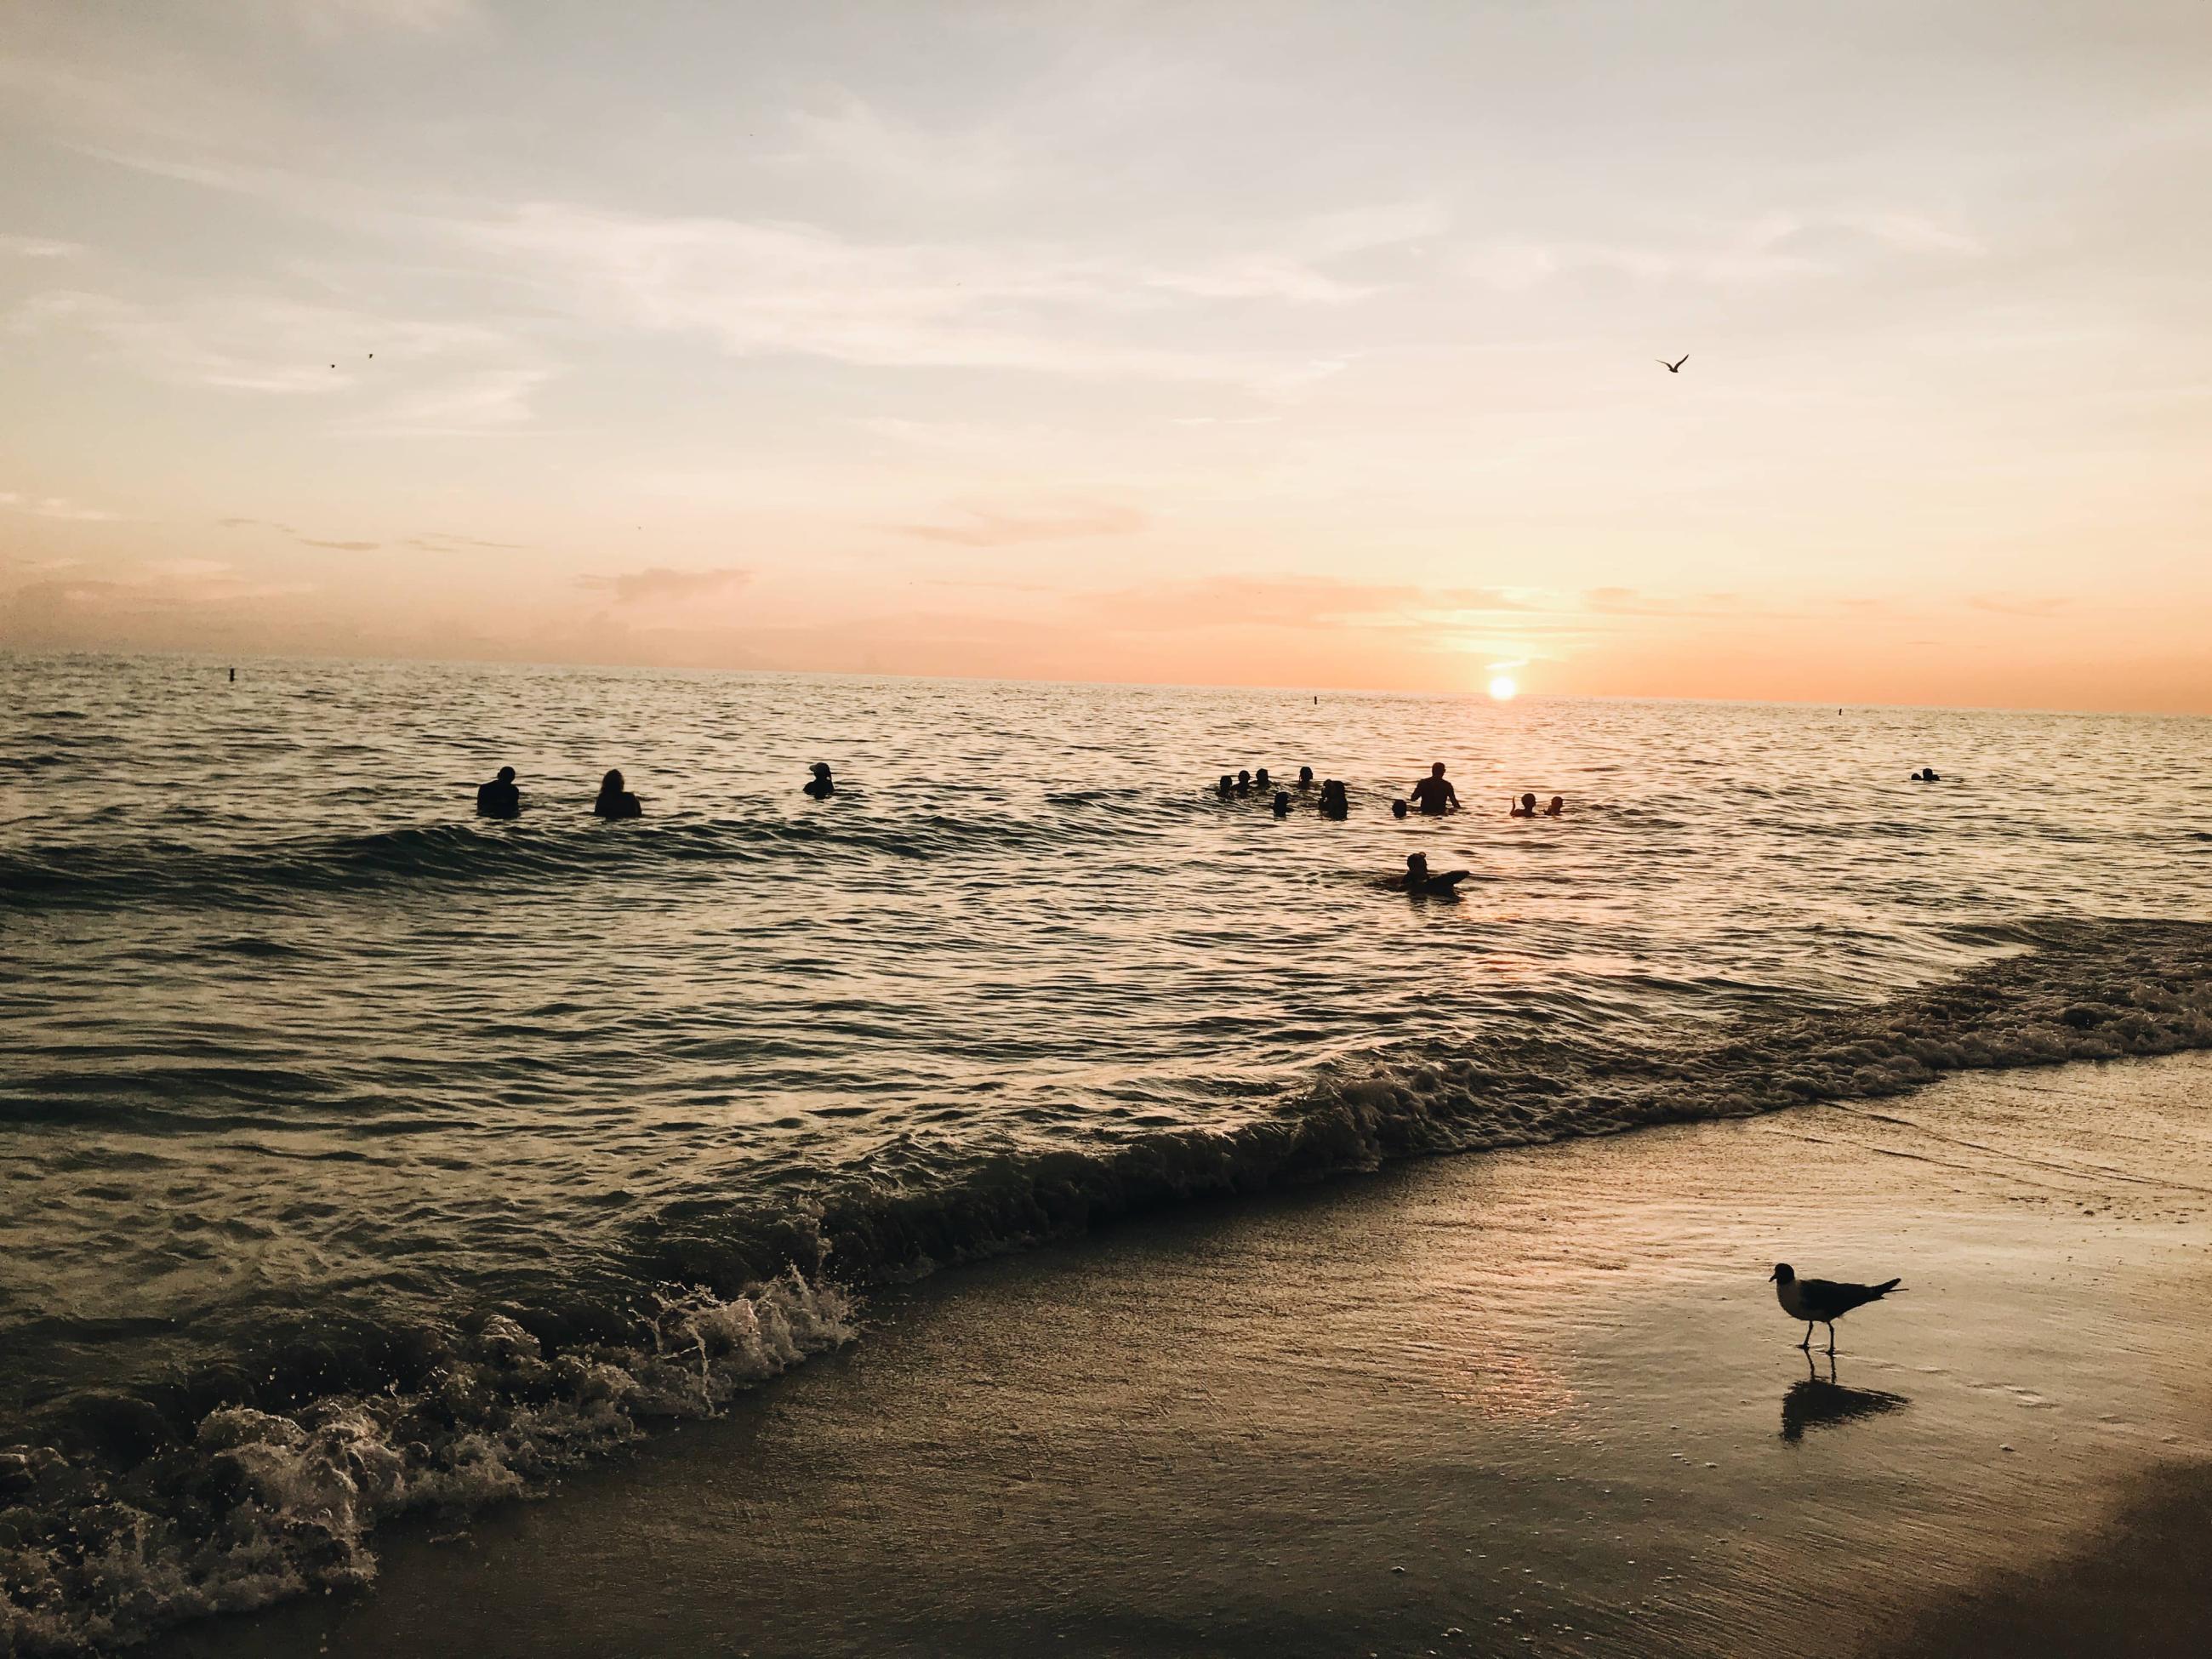 Bradenton Beach: People enjoying a sunset in Bradenton Beach, Florida. 